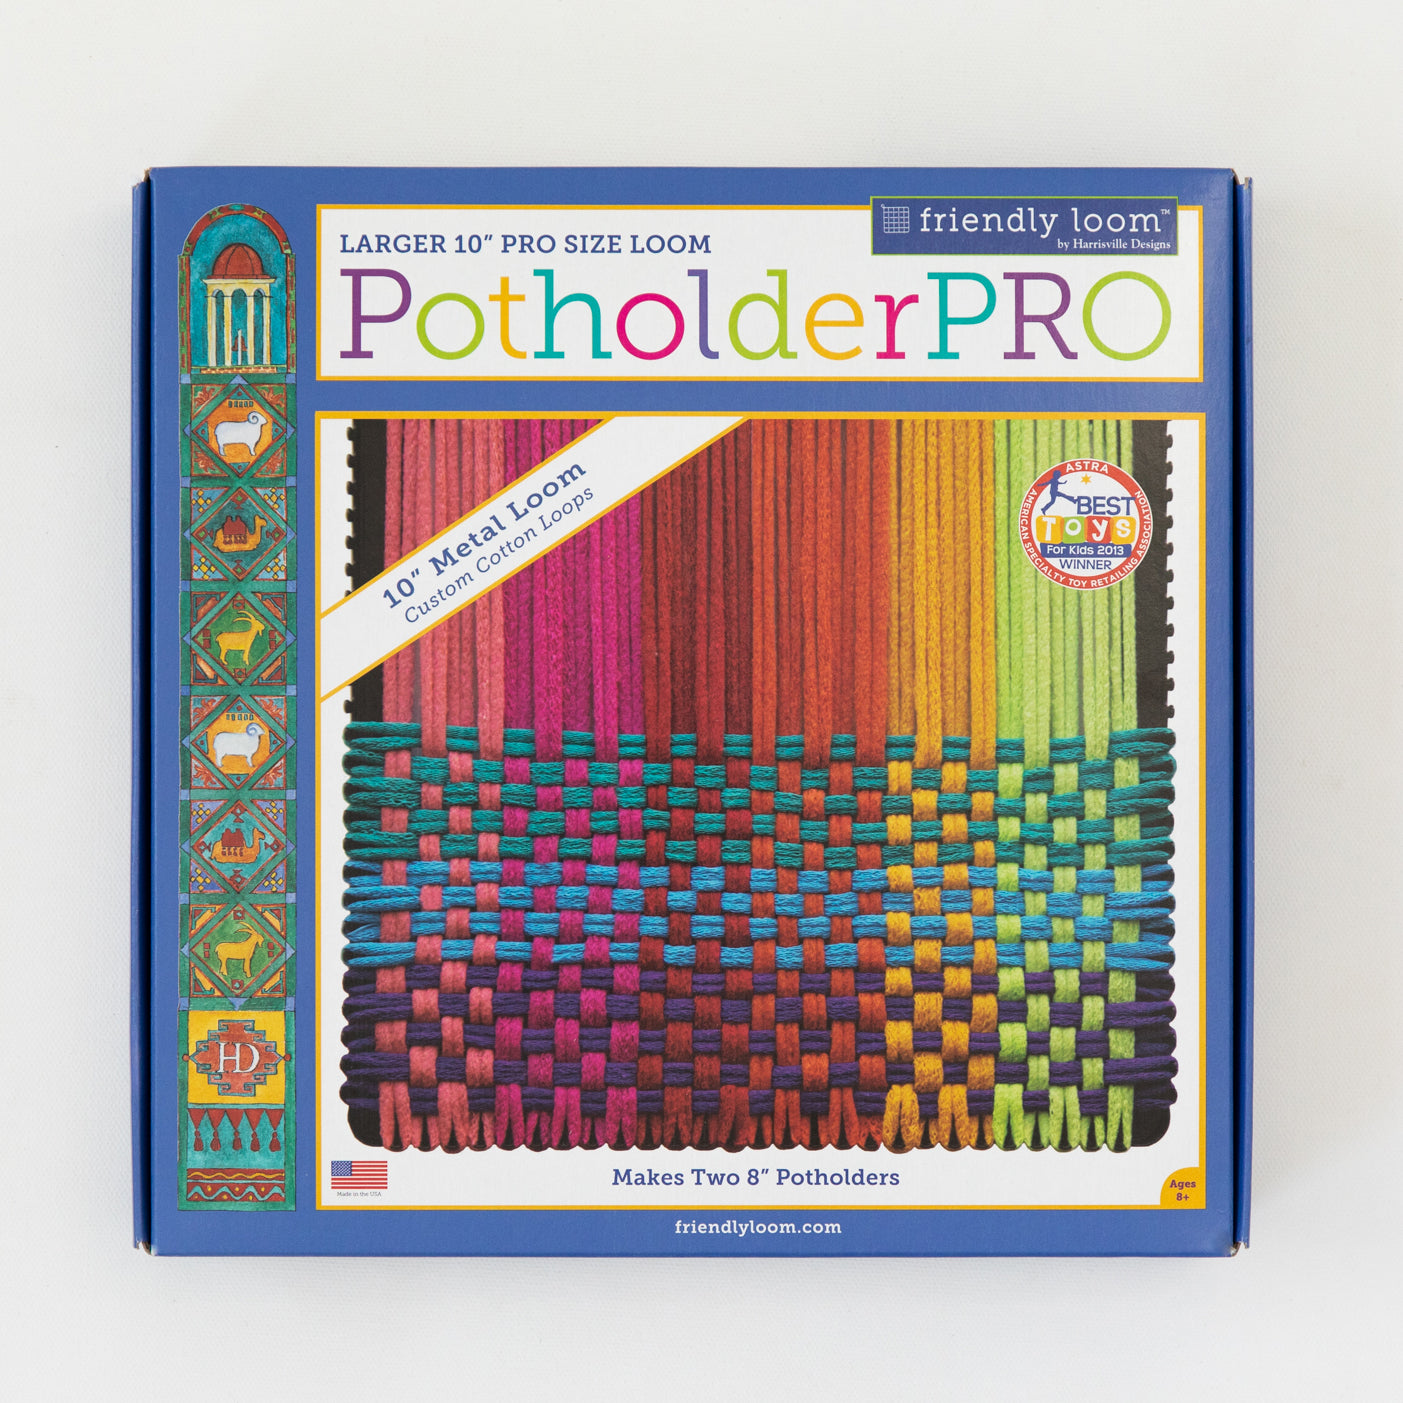 Potholder PRO Loom Kit (larger size) – Handiwork